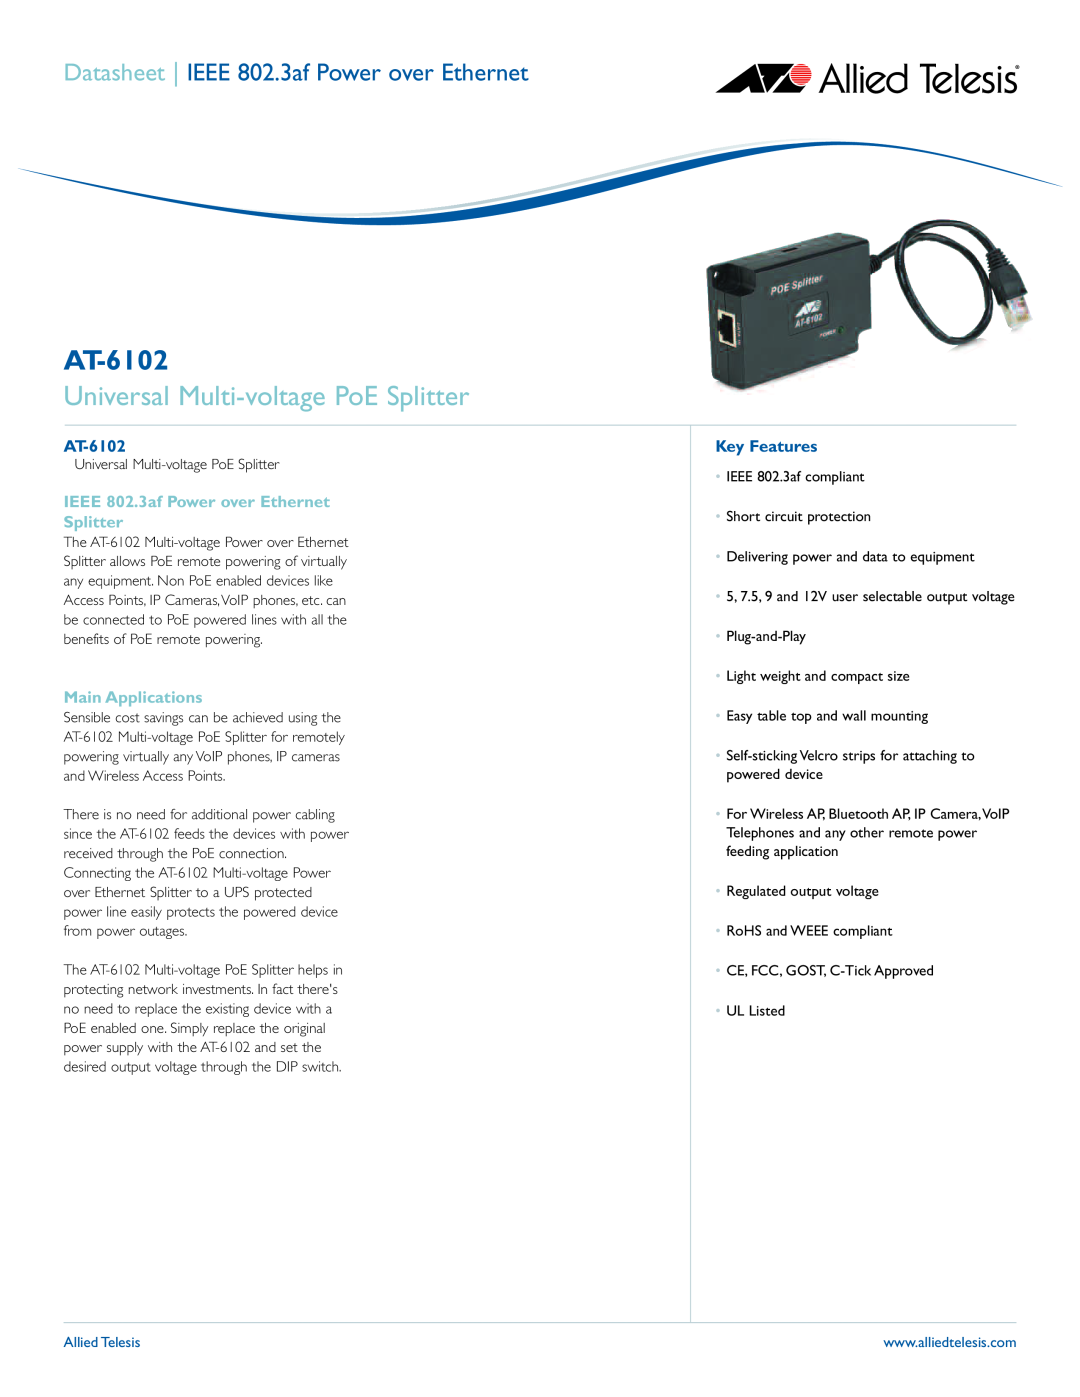 Allied Telesis AT-6102 manual PN 613-000635 Rev A, IEEE 802.3af Universal Multi-voltage PoE Splitter 